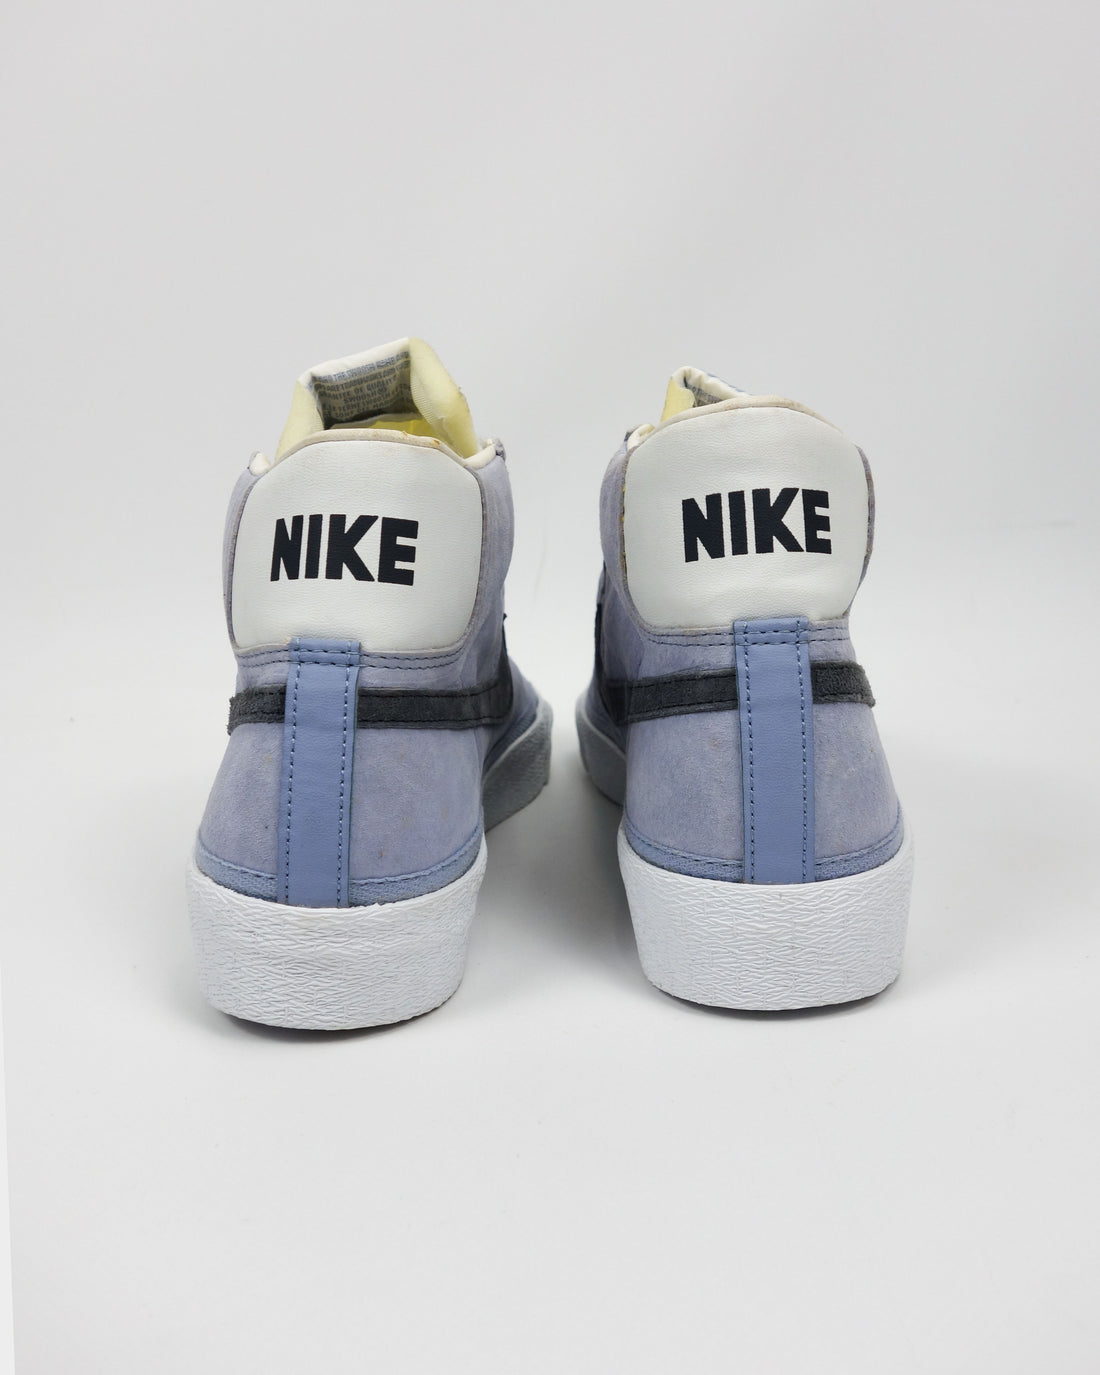 Nike Blazer Baby Blue Suede Mid CO.JP 2002